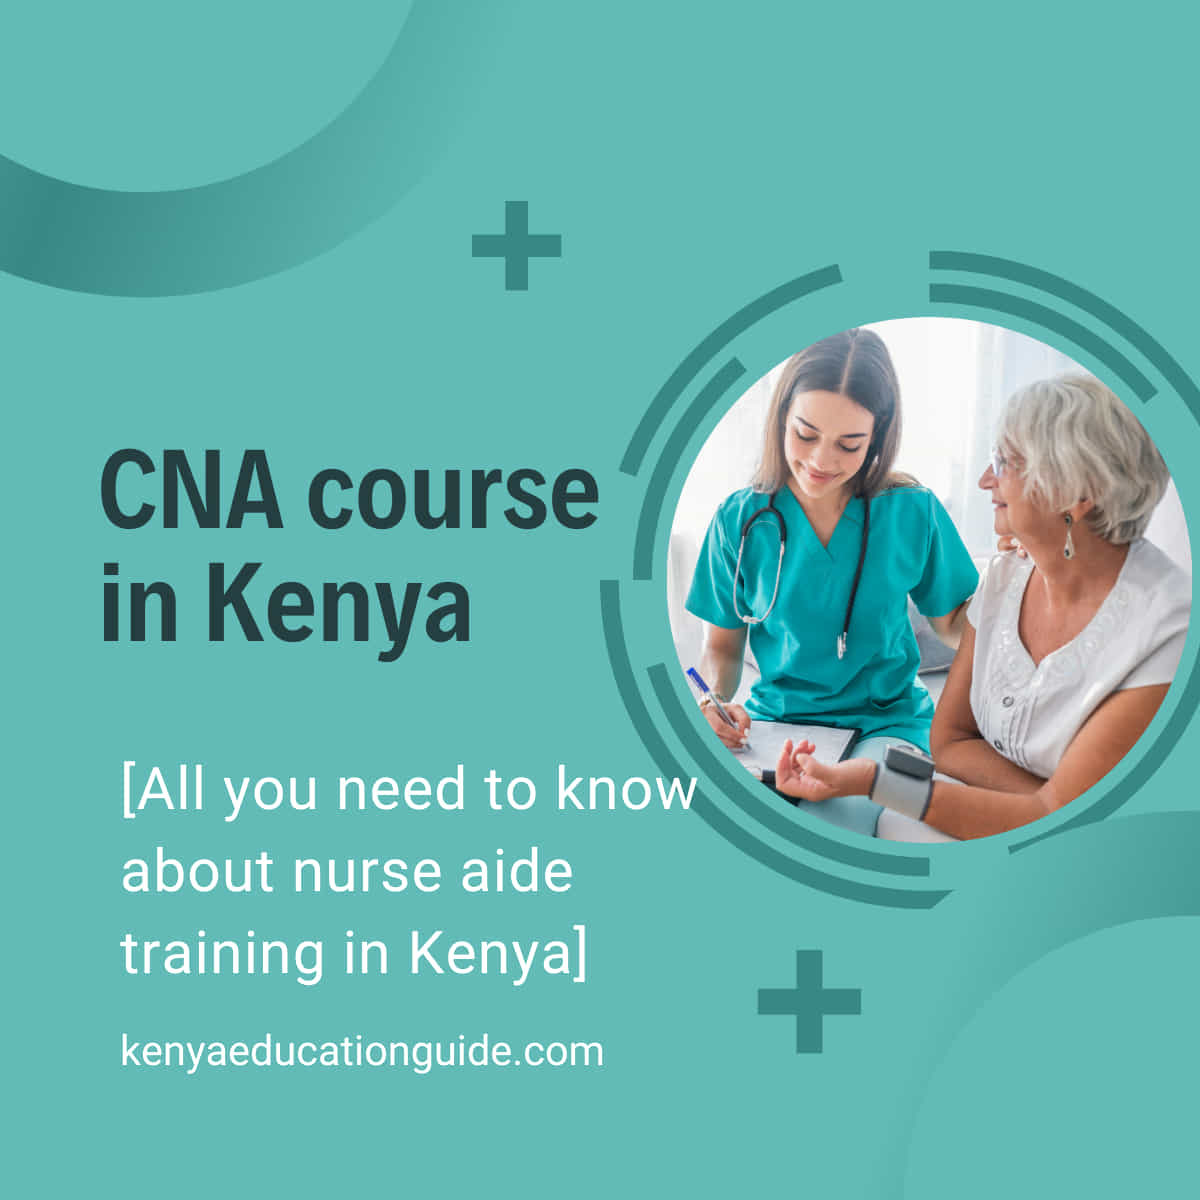 CNA course in Kenya